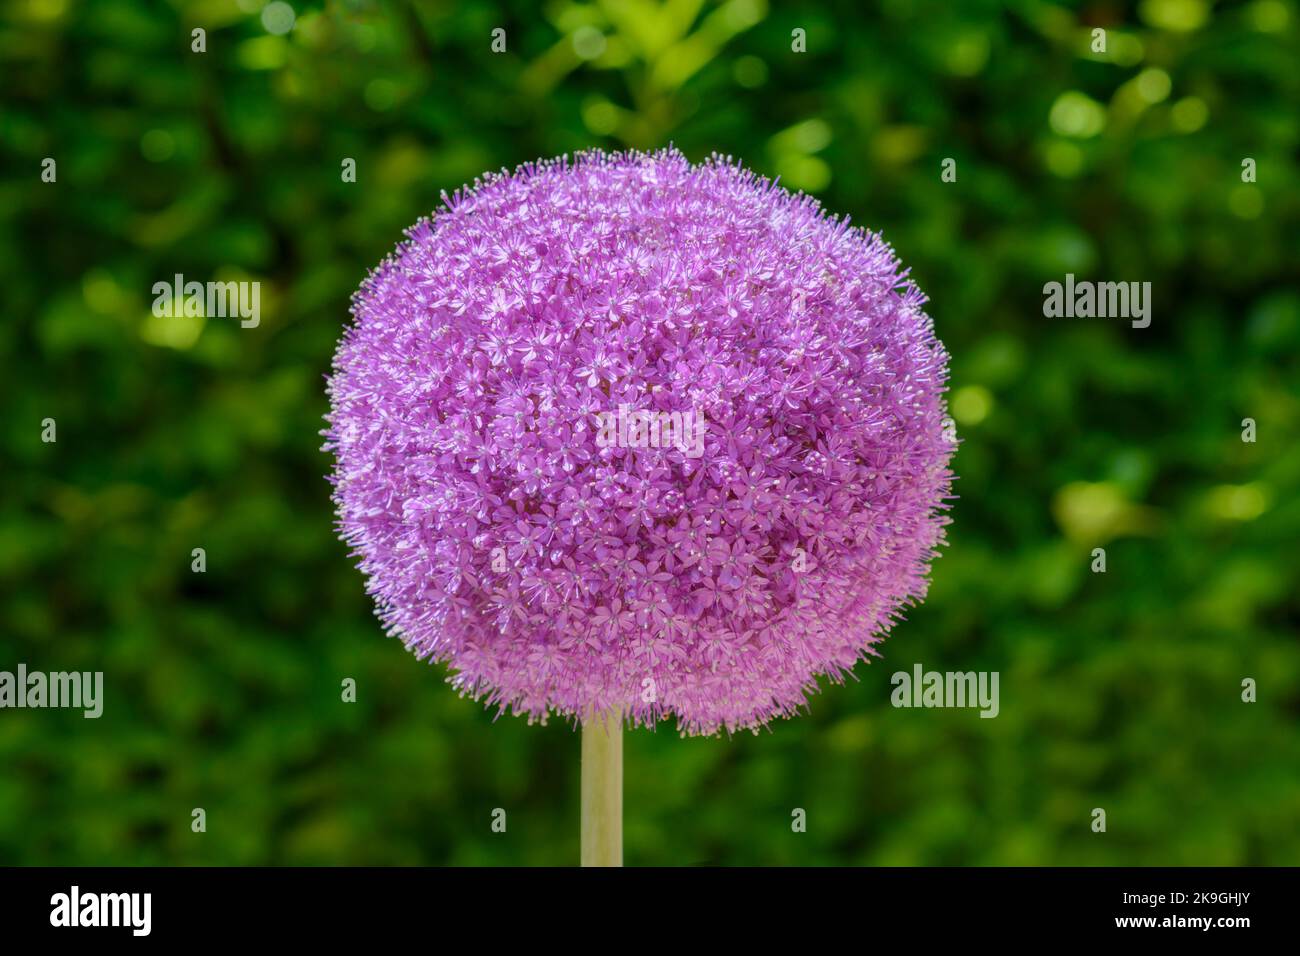 Purple Allium giganteum or giant onion isolated against green foliage Stock Photo